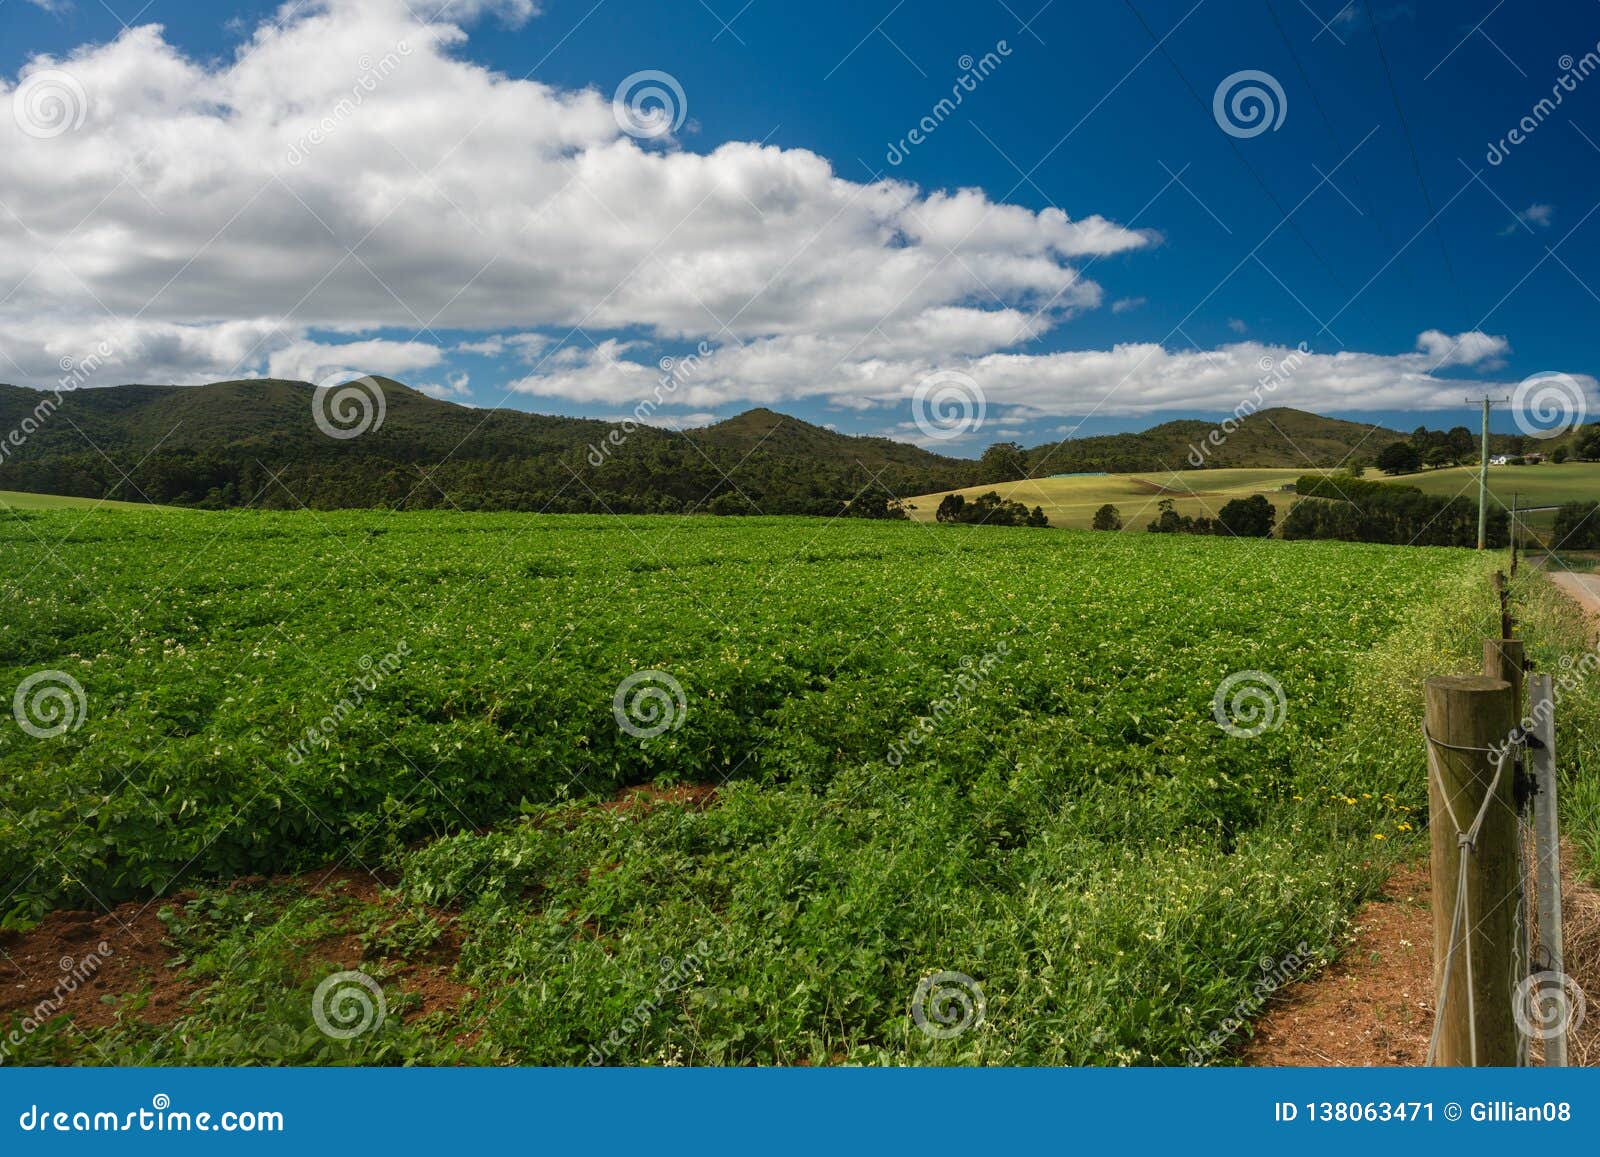 potato farm, strong summer crop, tasmania, australia